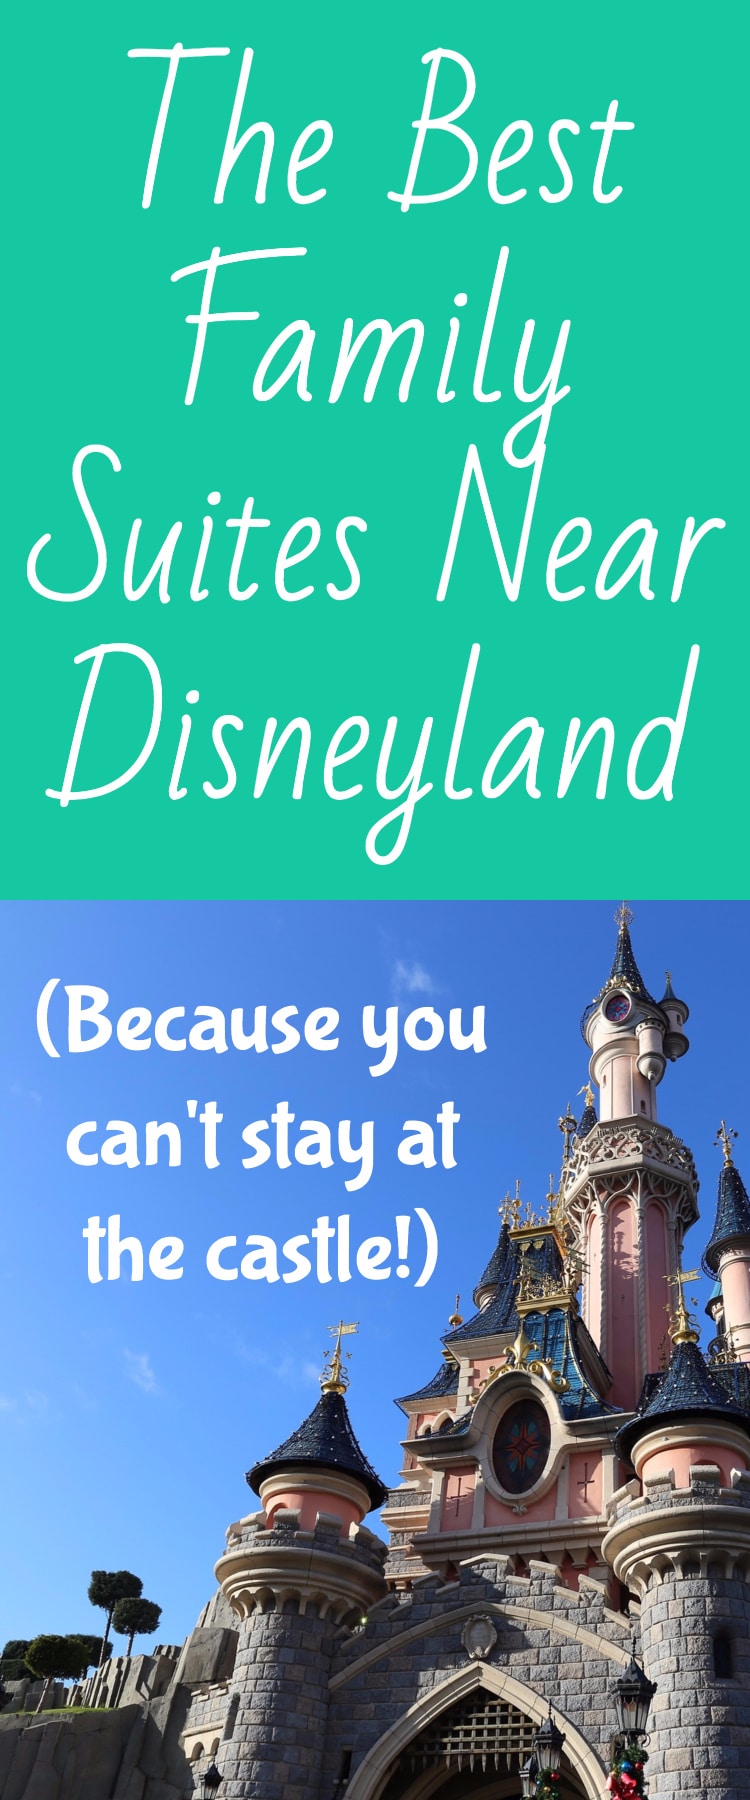 Disneyland / DIsneyland Hotels / Family Disneyland Trip / Planning Disney Trip / Disney #Disneyland #Disney #California